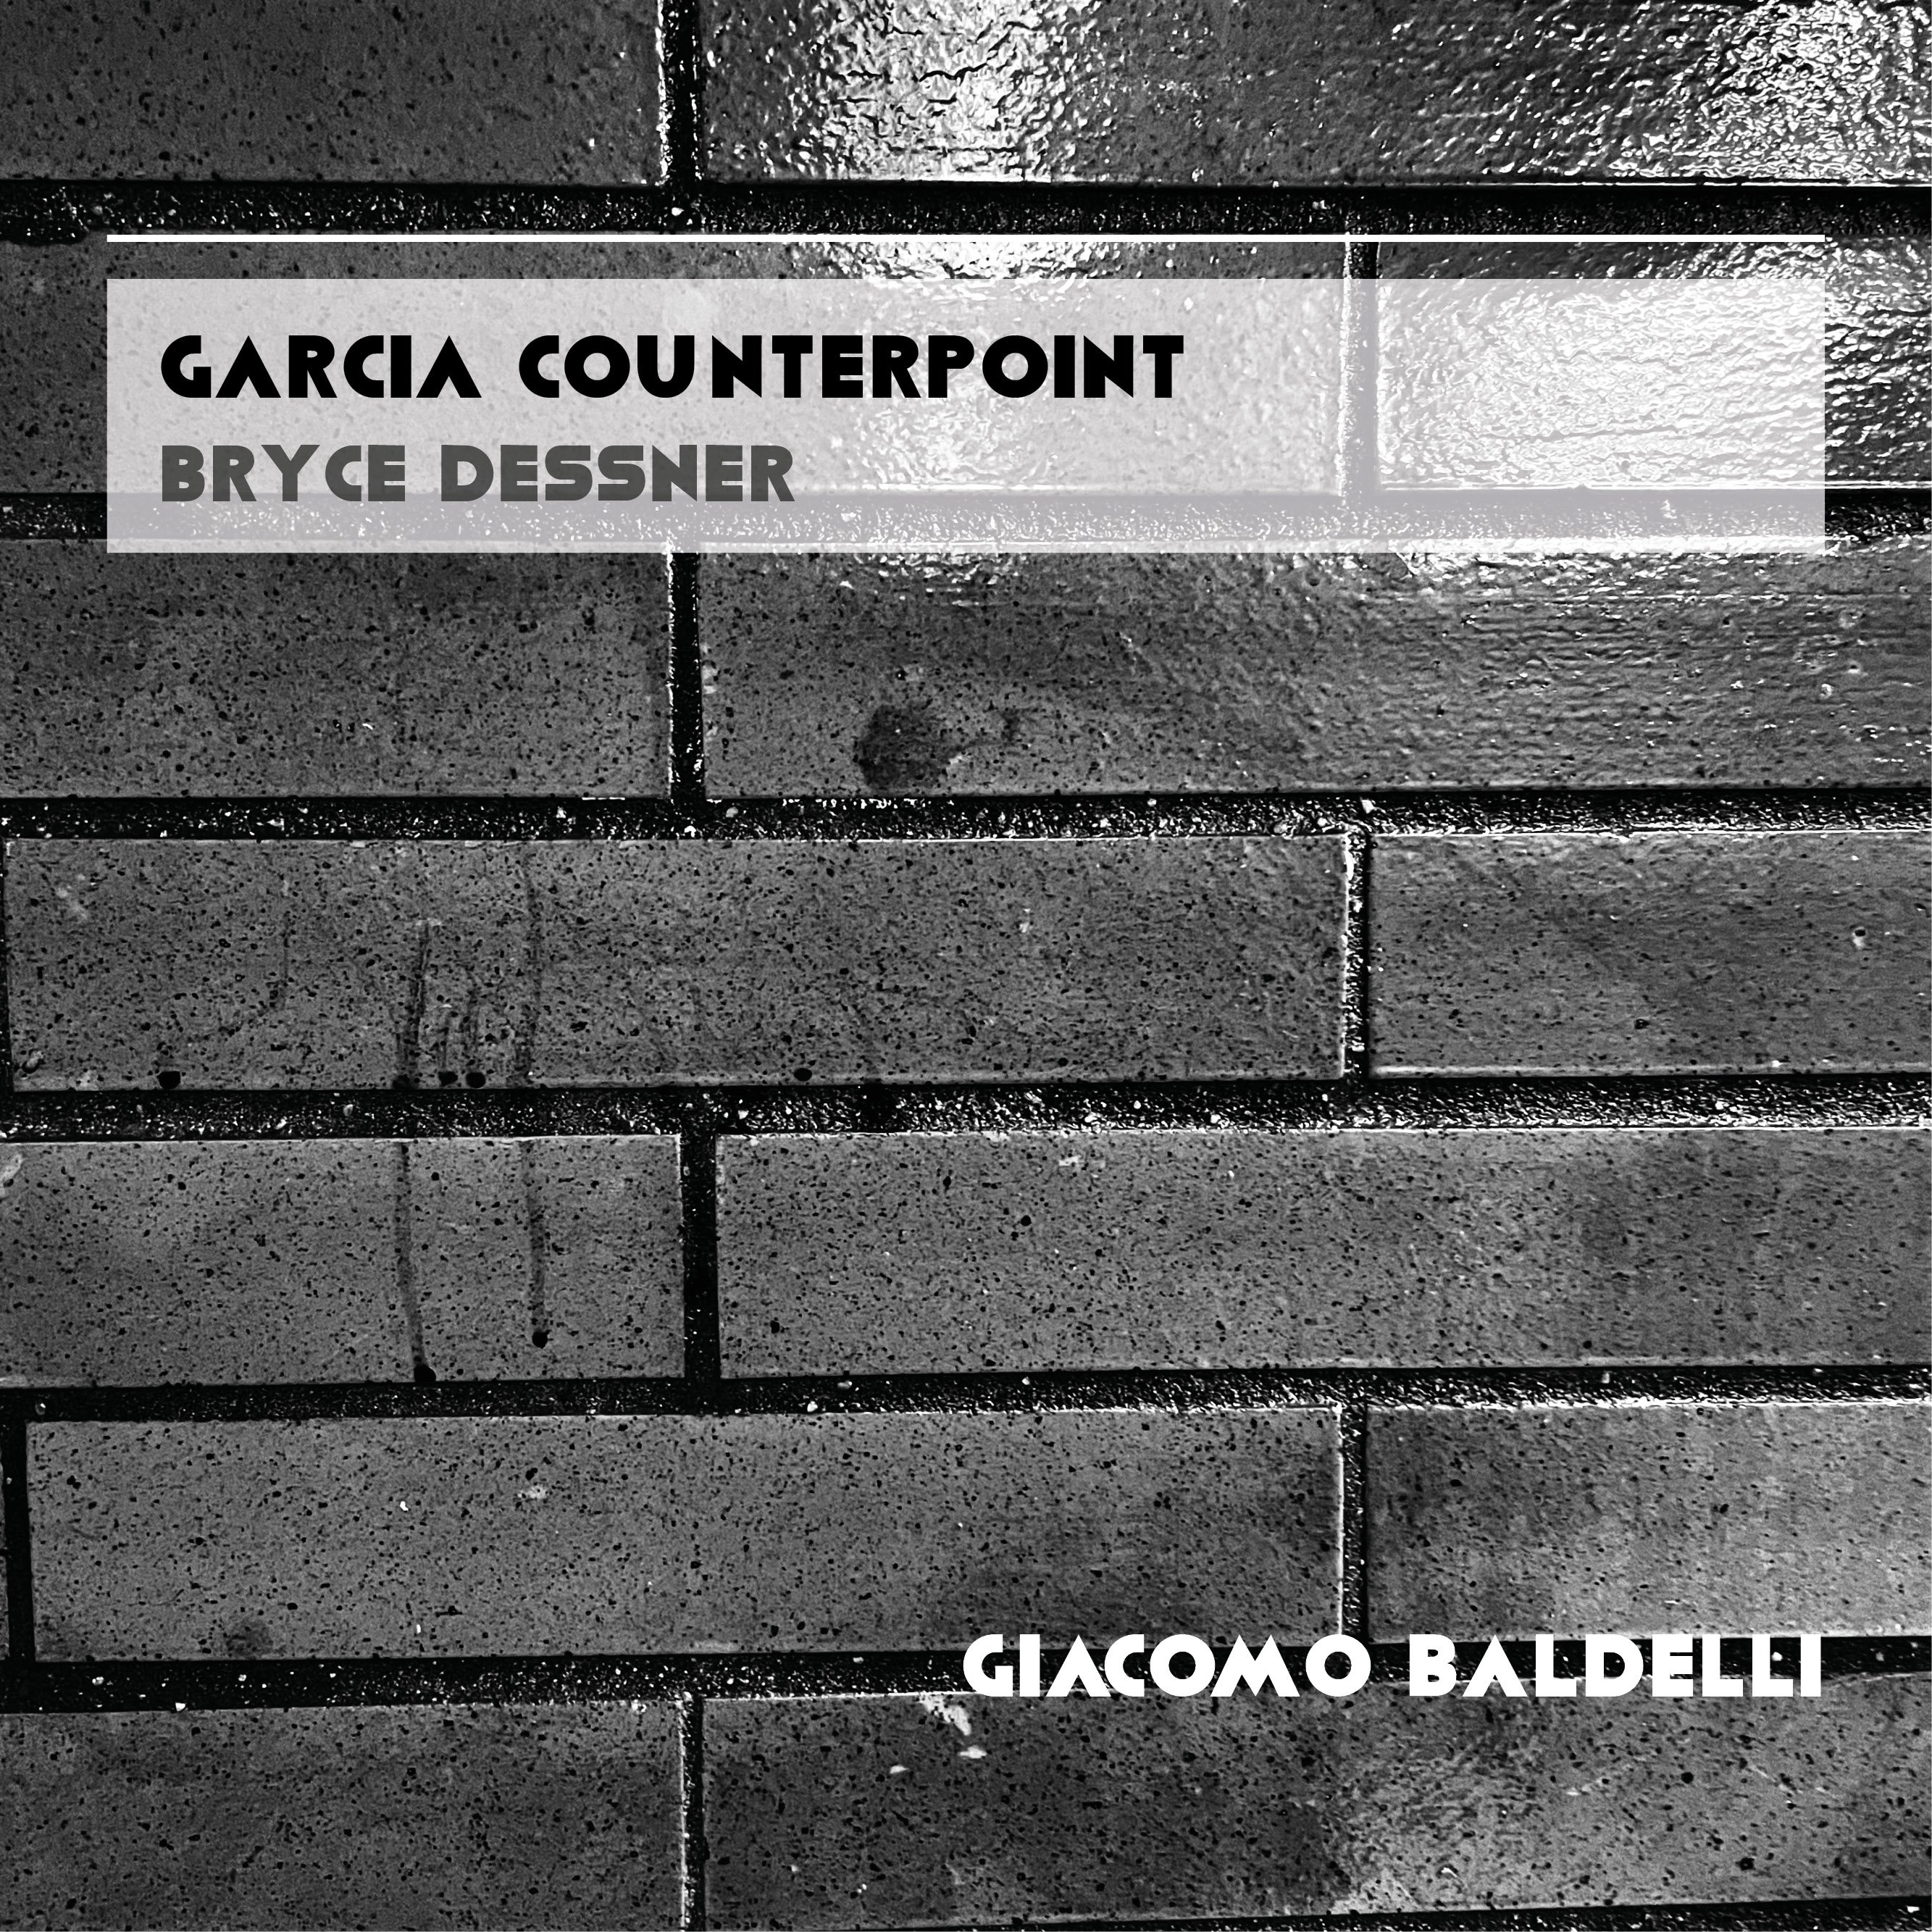 Garcia Counterpoint